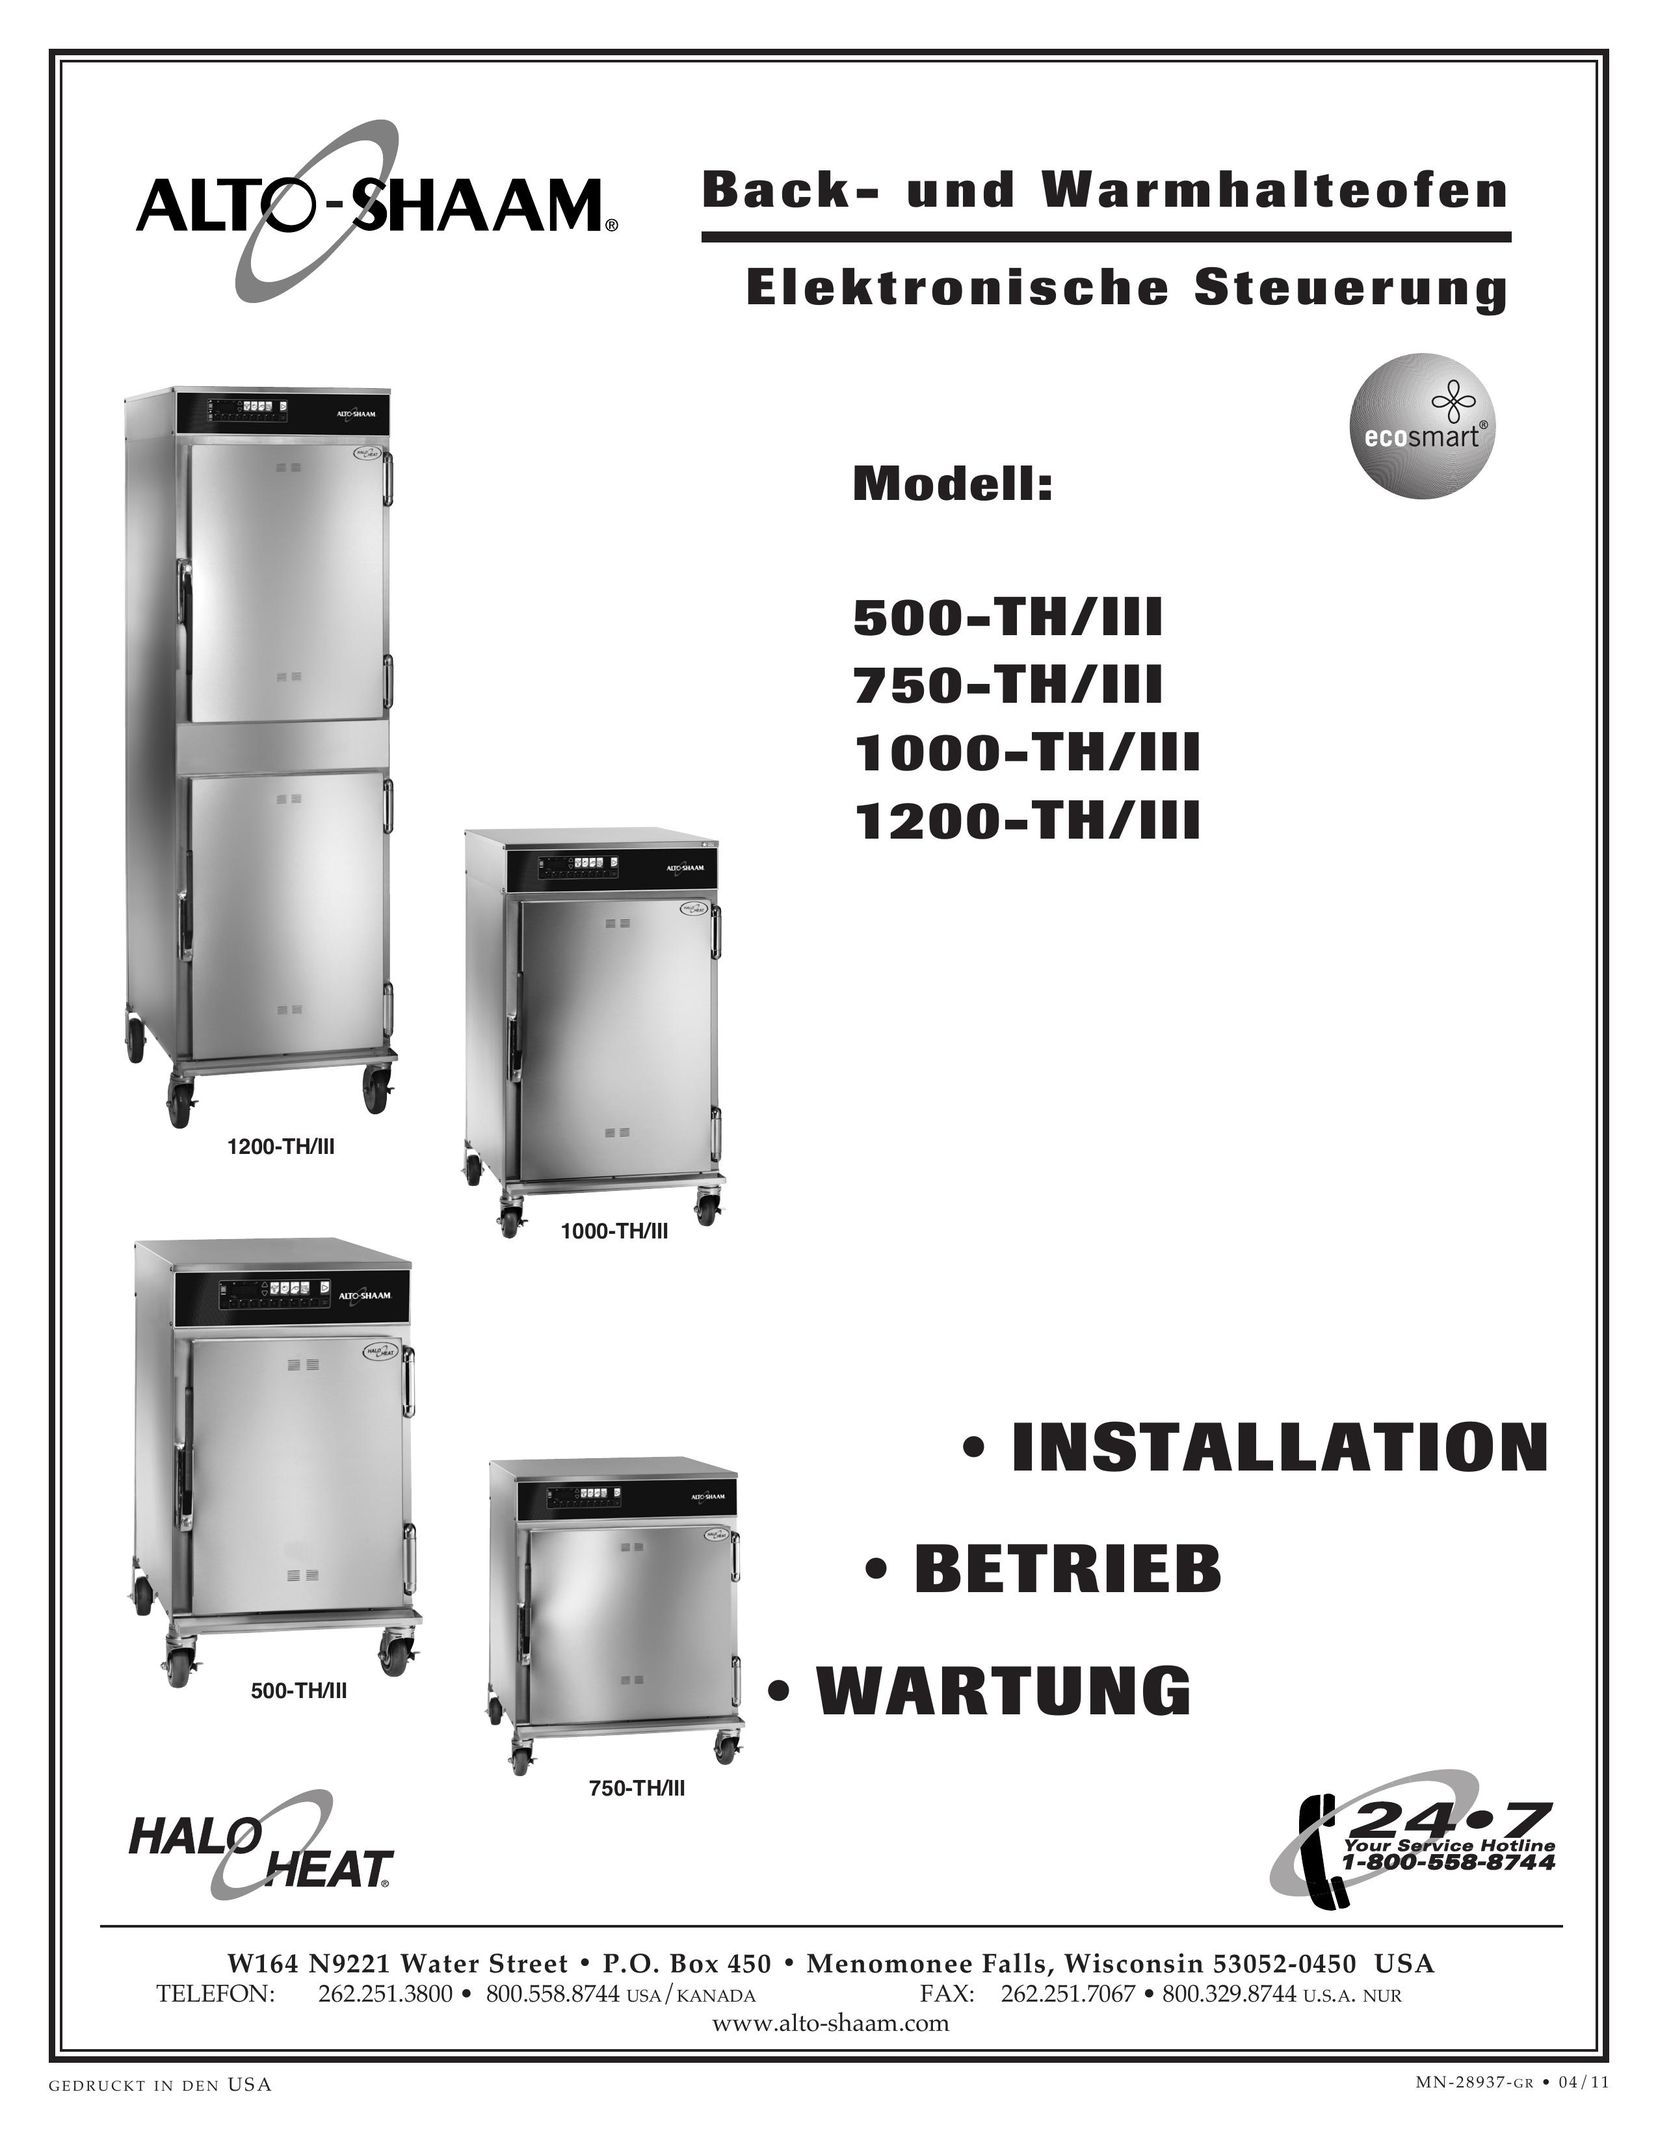 Alto-Shaam 750-TH/III Air Conditioner User Manual